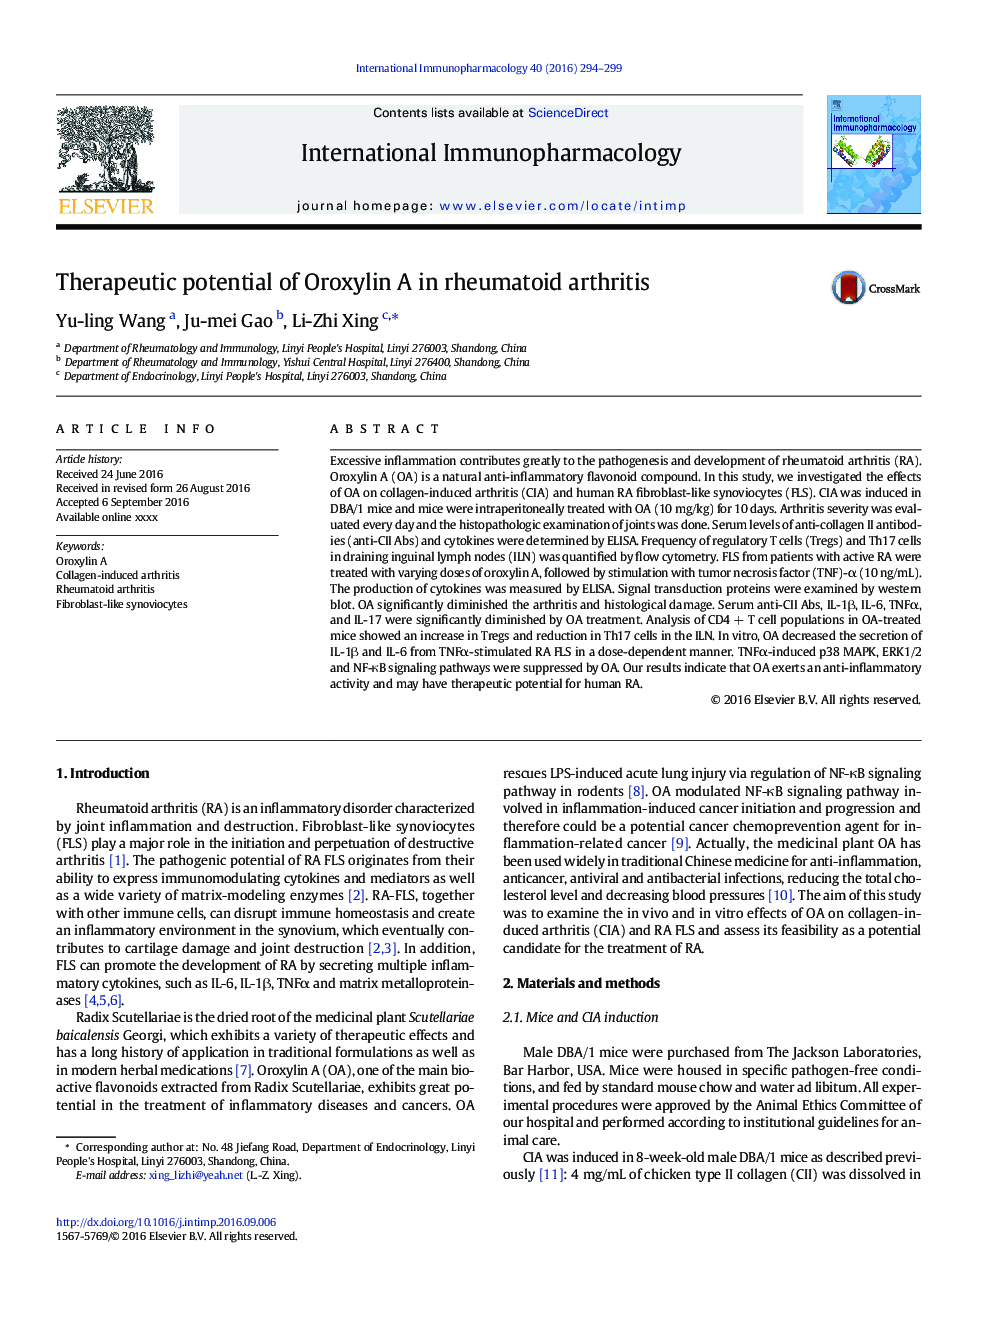 Therapeutic potential of Oroxylin A in rheumatoid arthritis